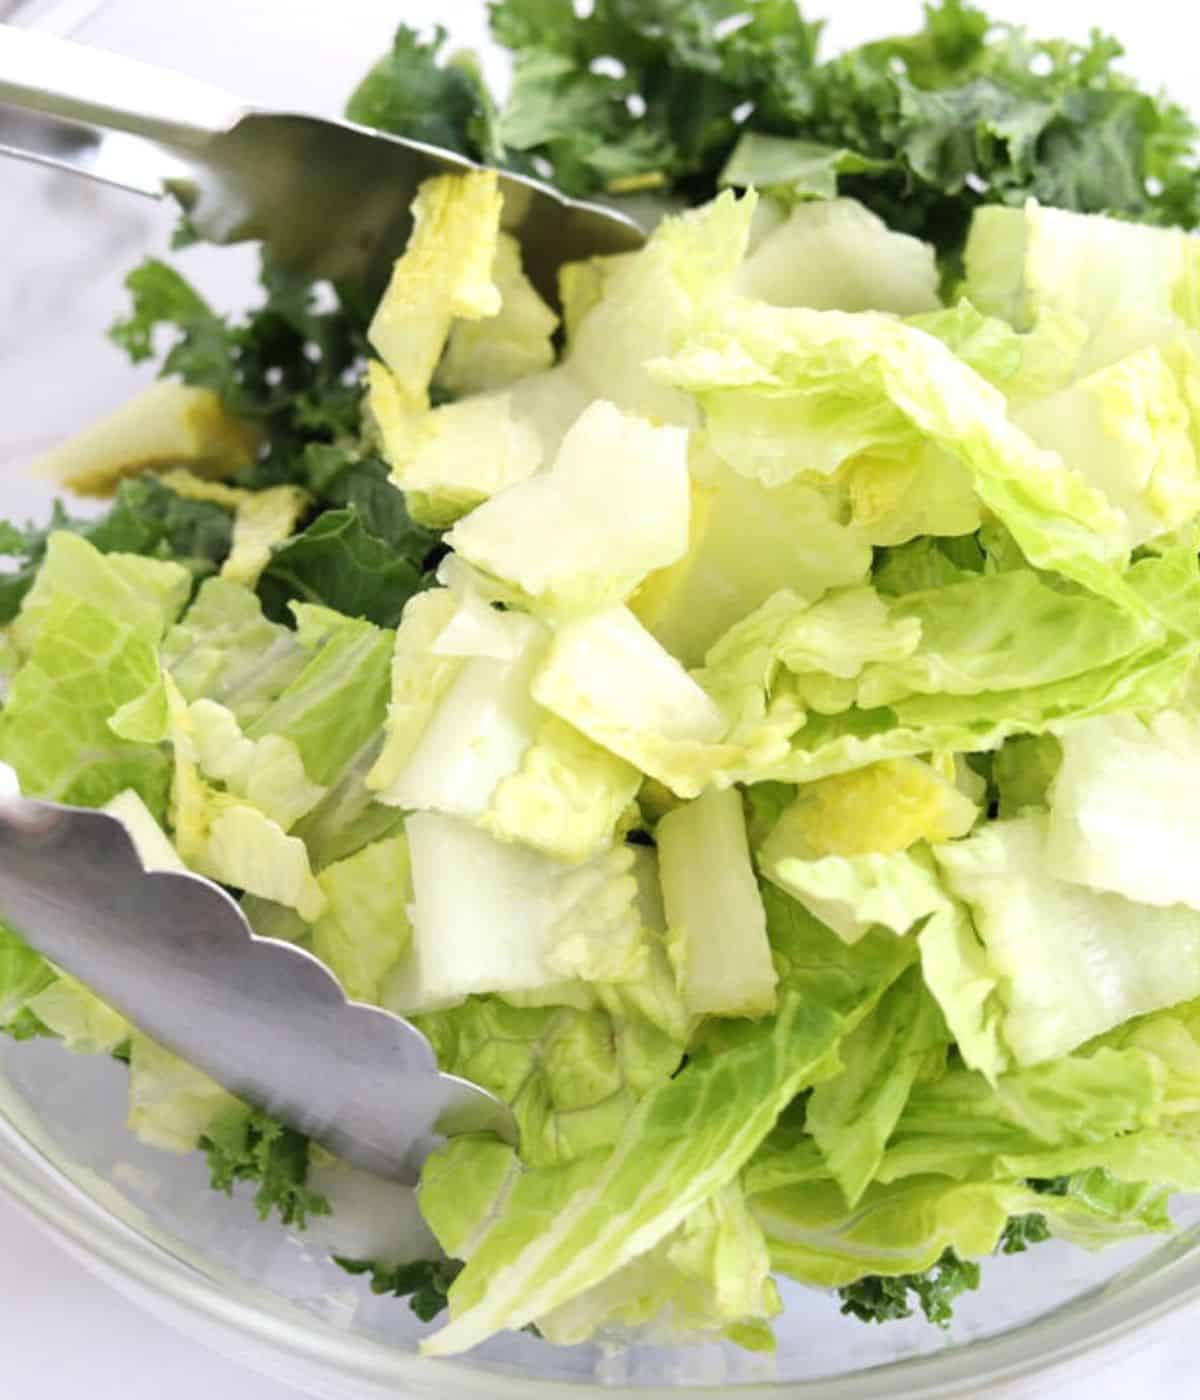 tossing salad ingredients